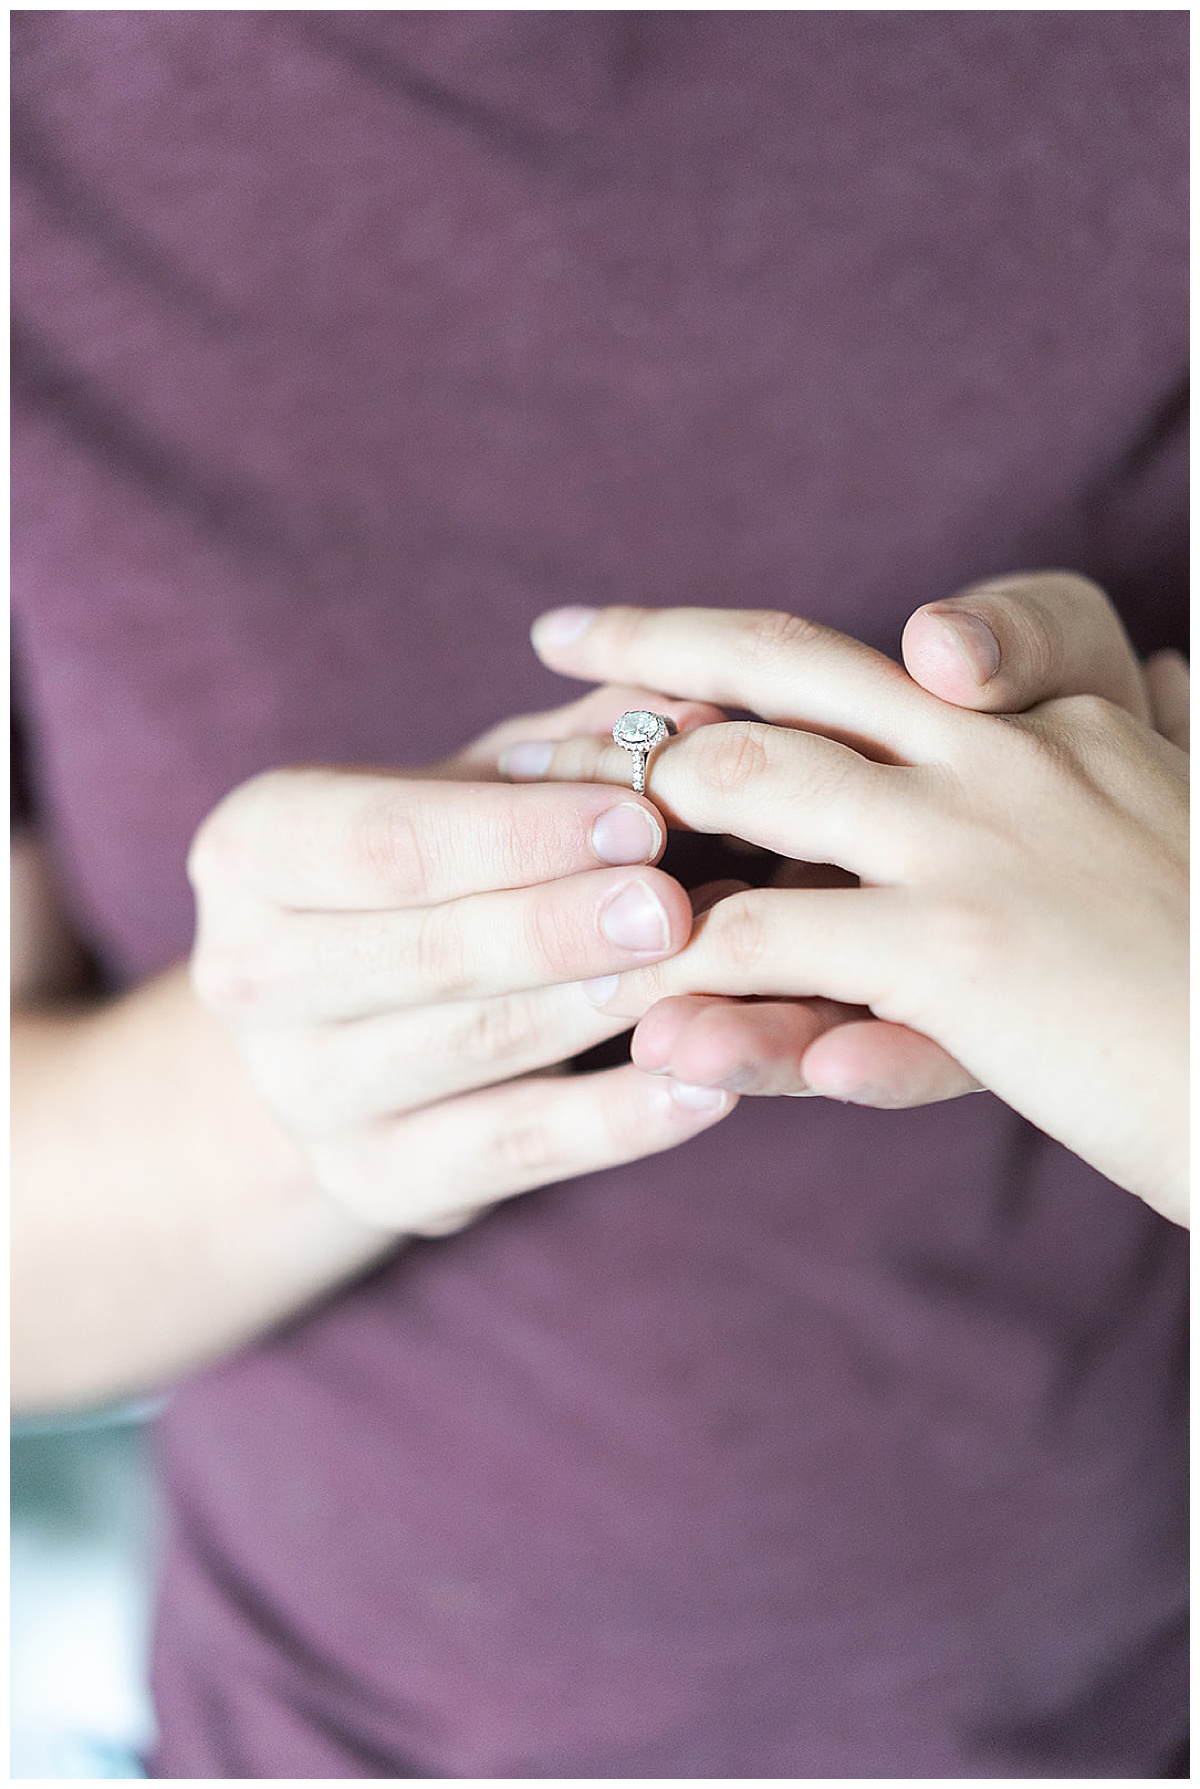 Stunning engagement ring for Houston’s Best Wedding Photographers